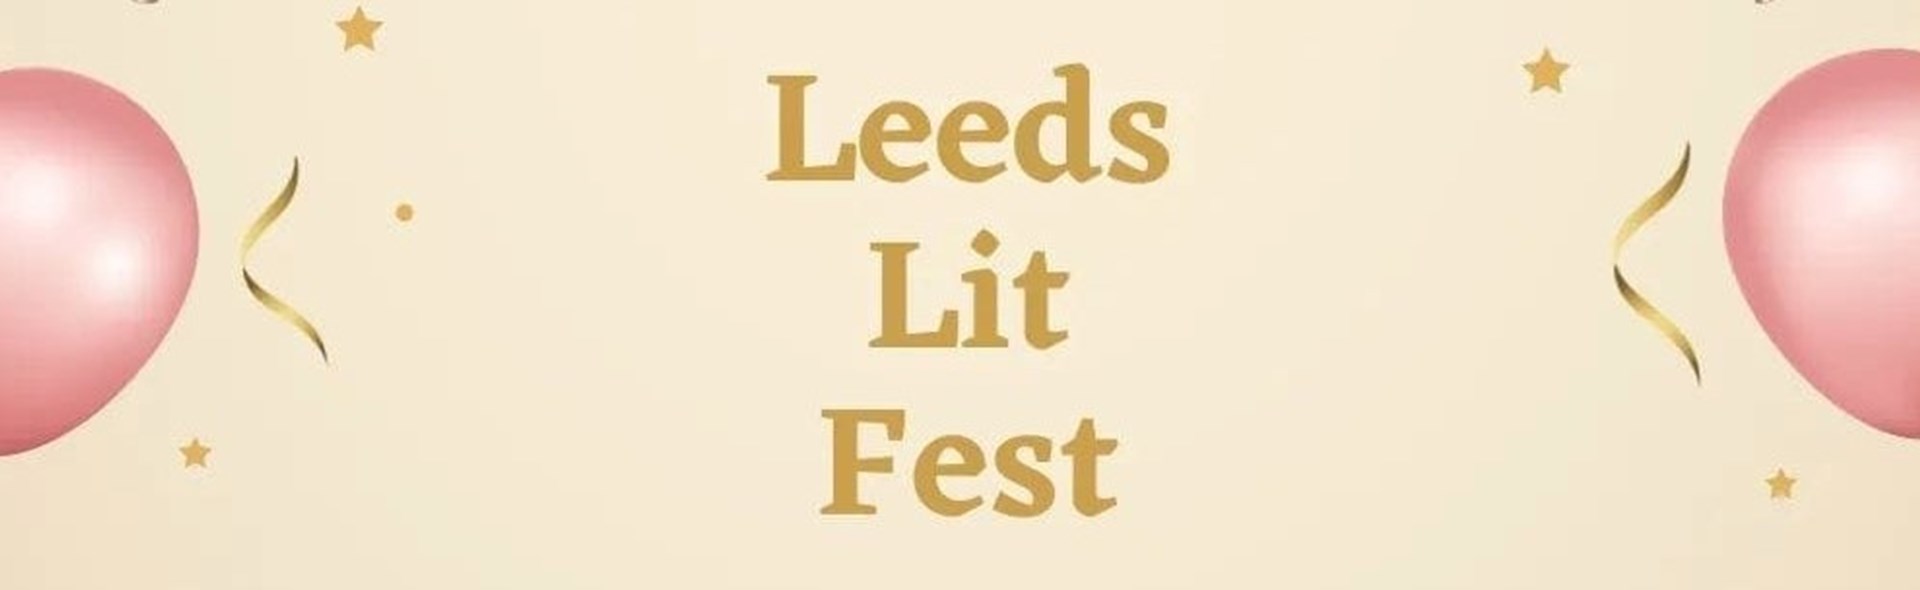 Leeds Lit Fest Wins Best Literary Festival!